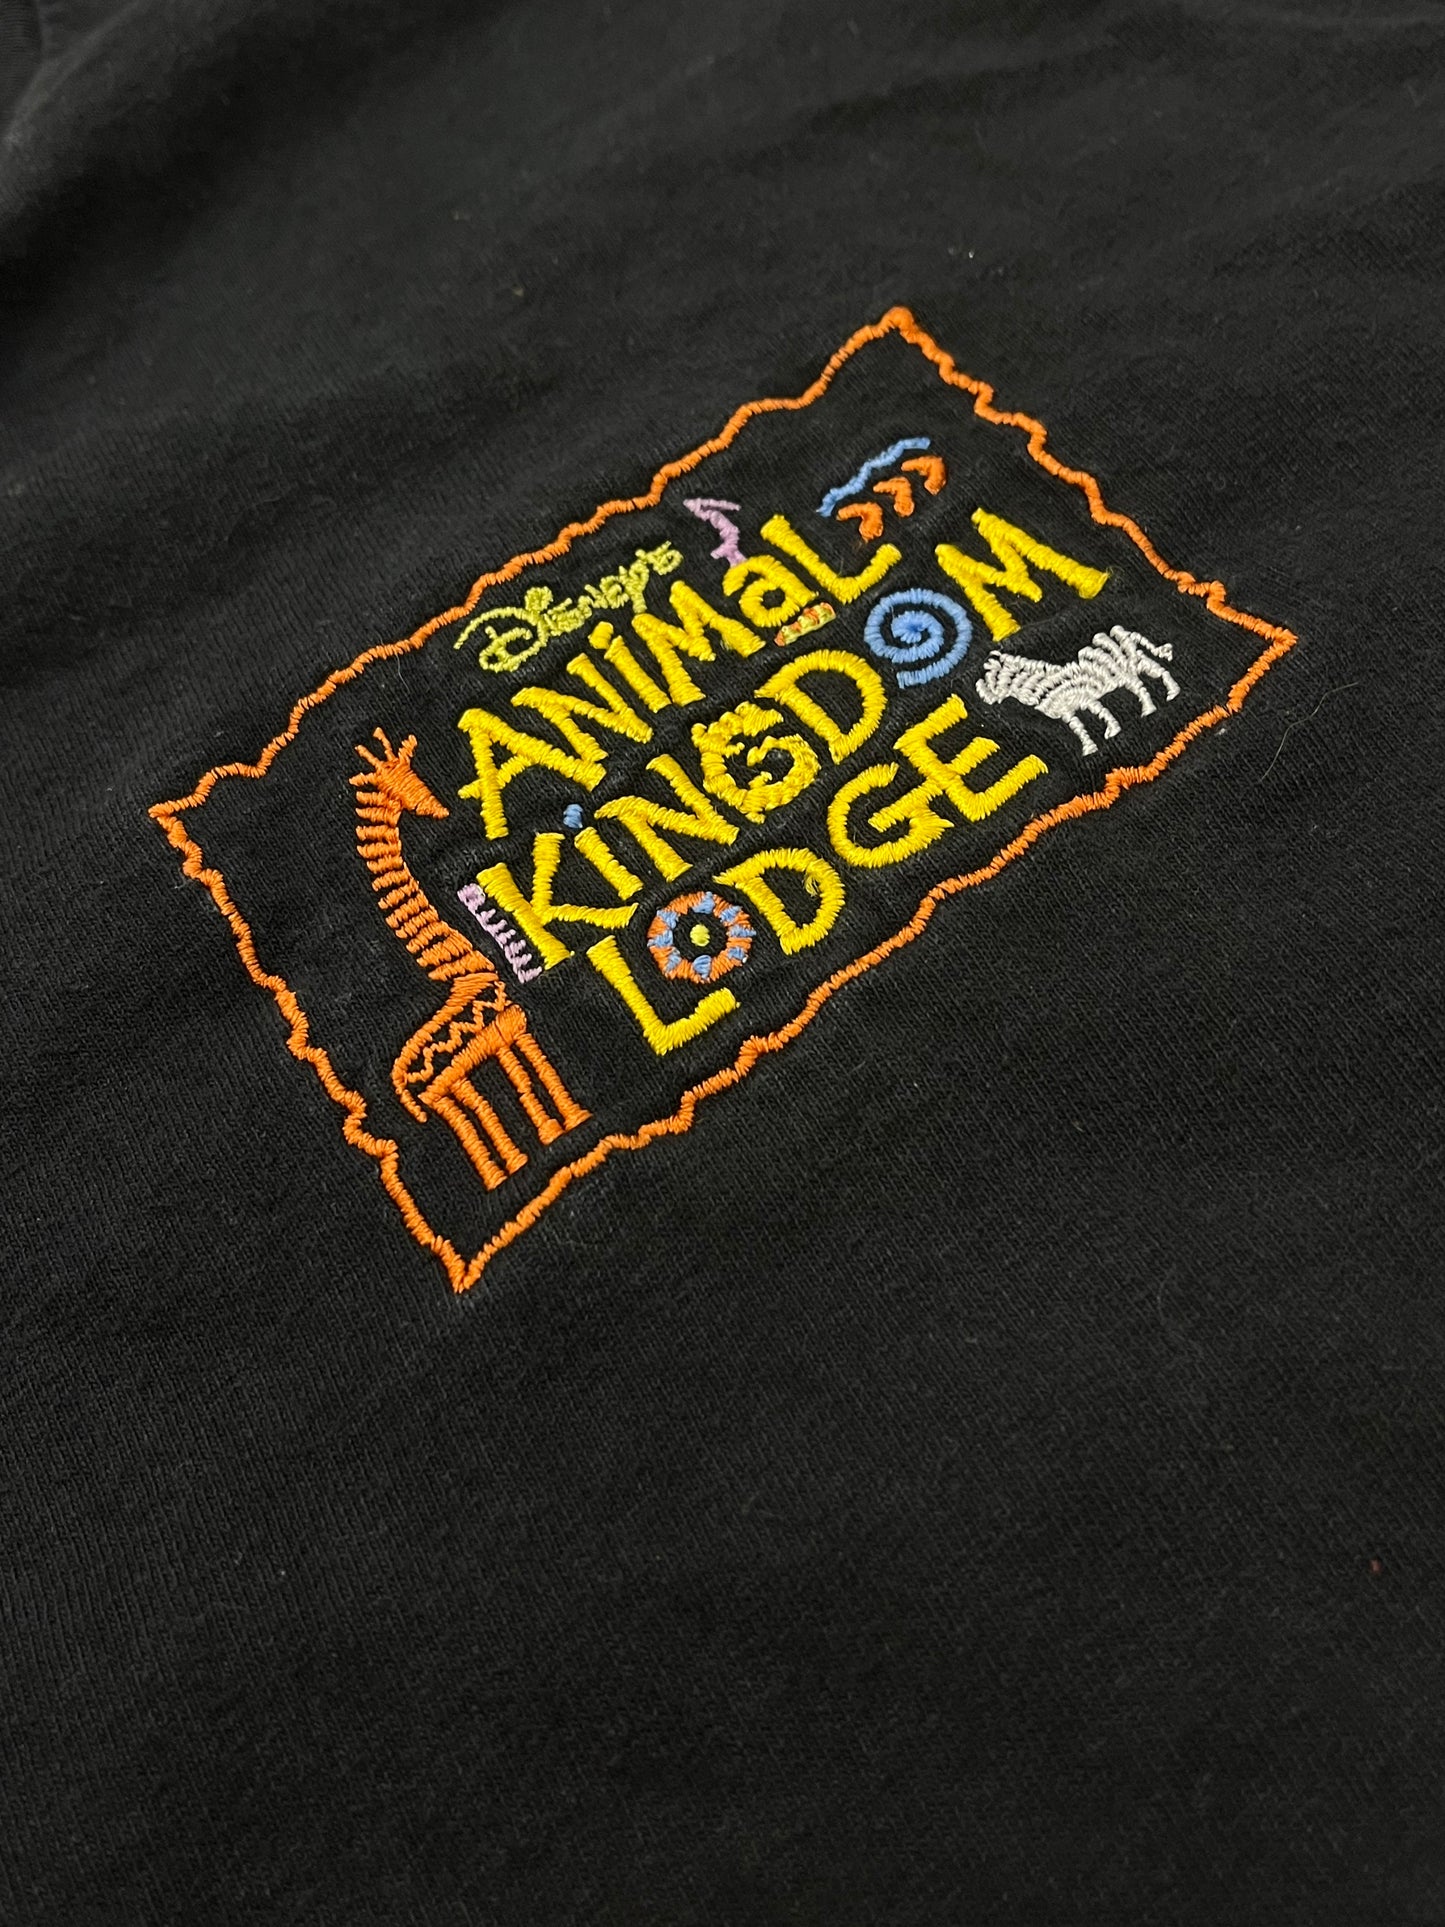 Vintage Disney Animal Kingdom Long Sleeve Shirt Size M